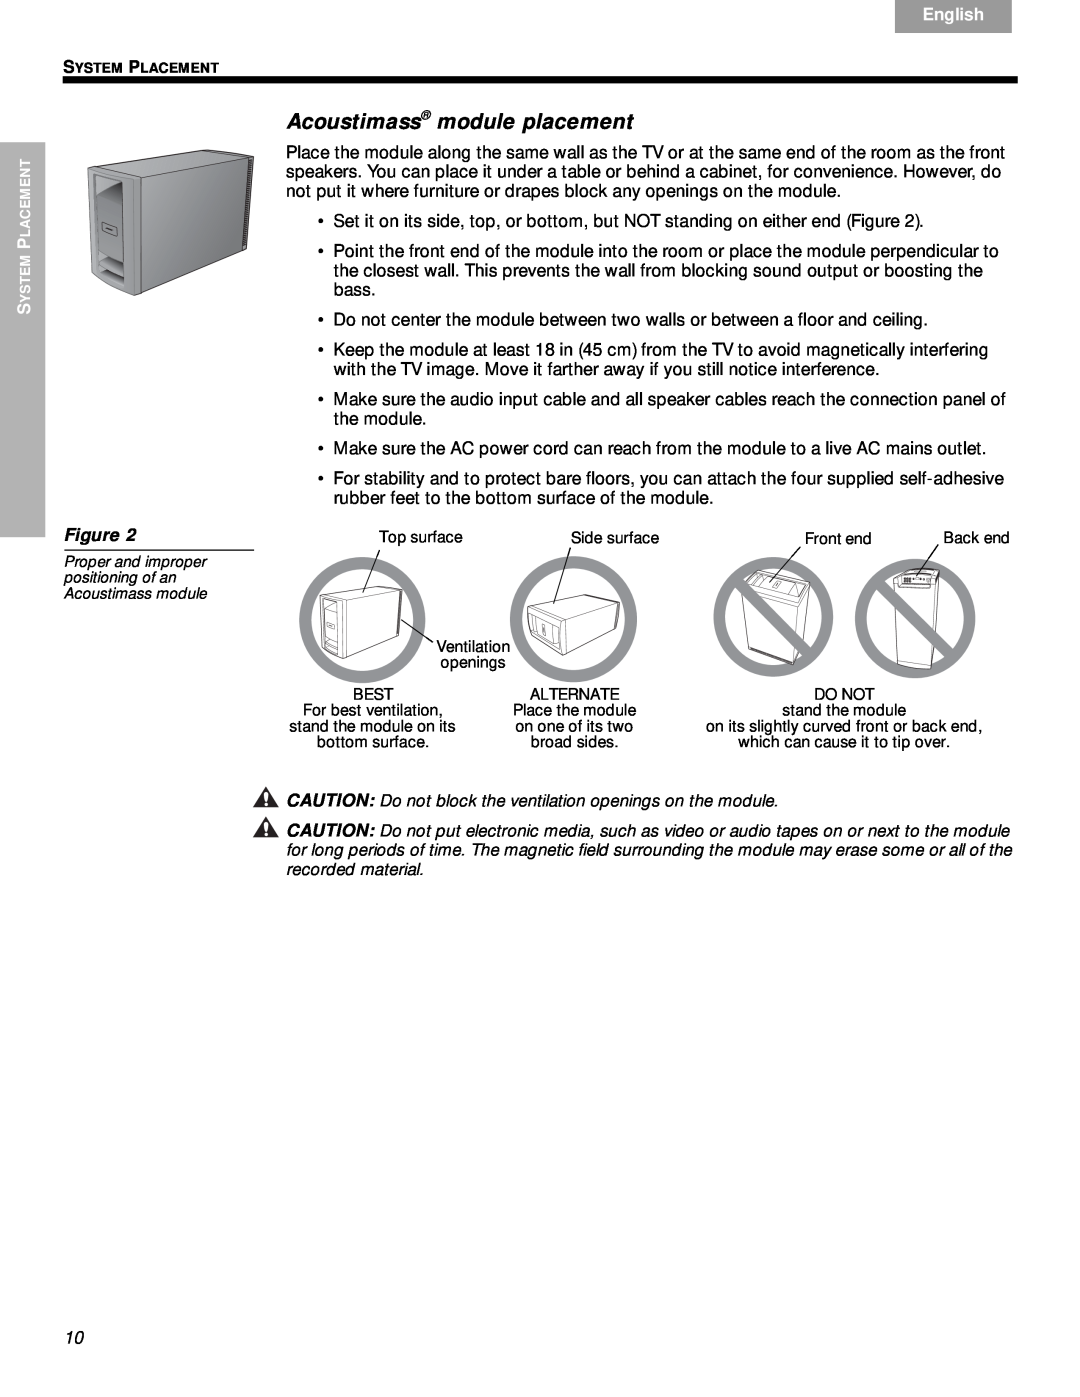 Bose VS-2 manual Acoustimass module placement, Nederlands, Svenska, English, Figure 